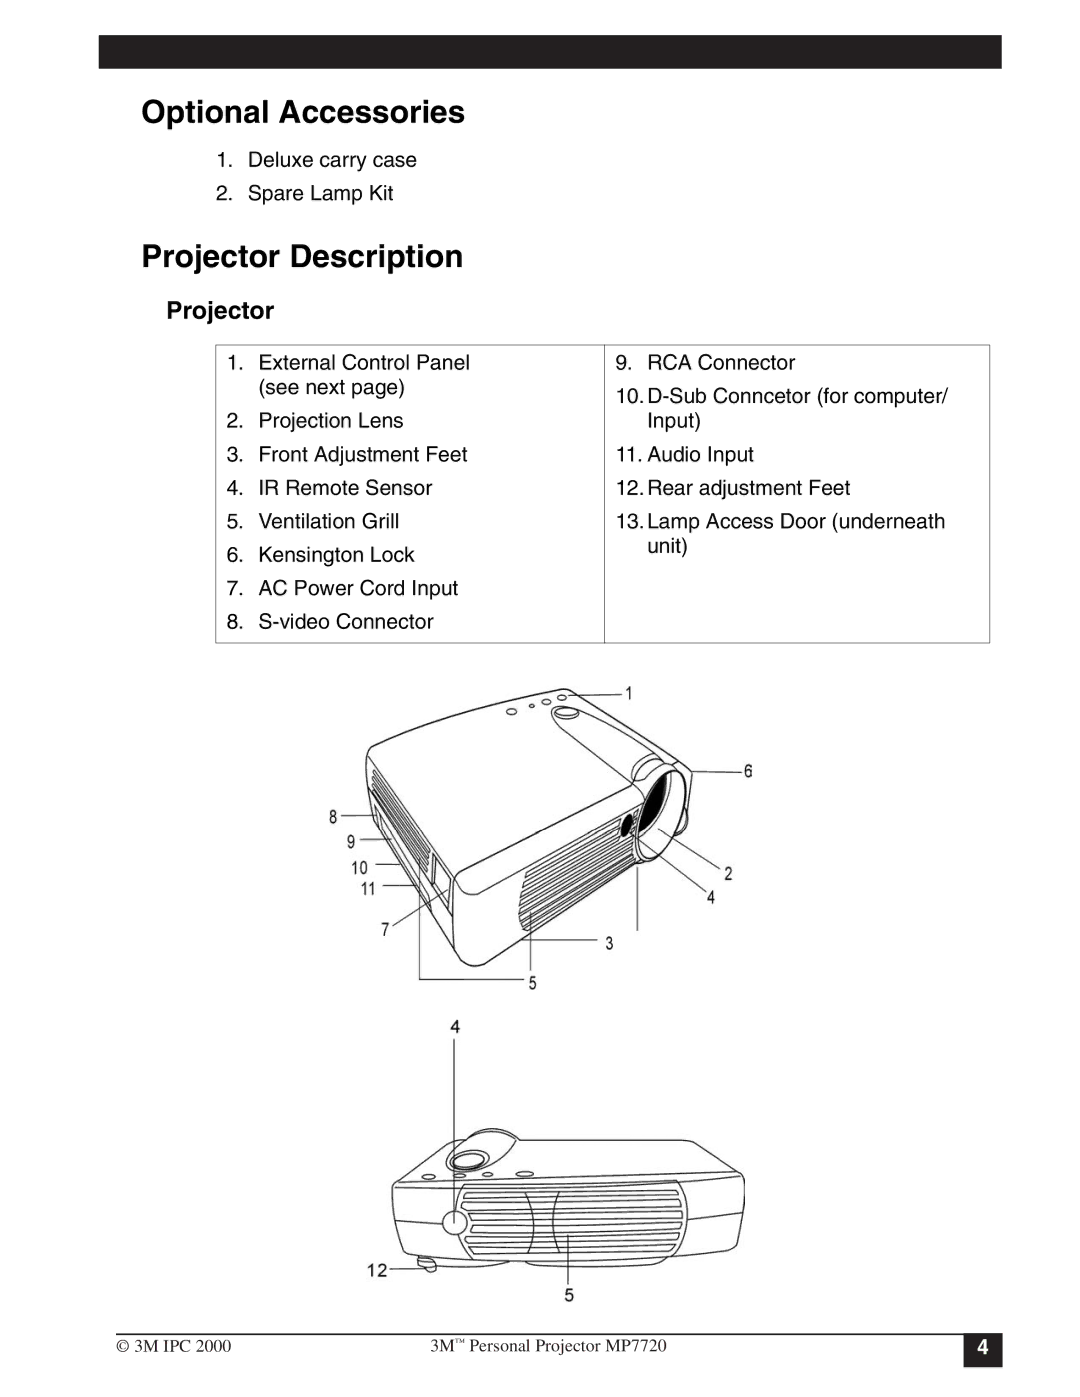 3M MP7720 manual Optional Accessories, Projector Description 